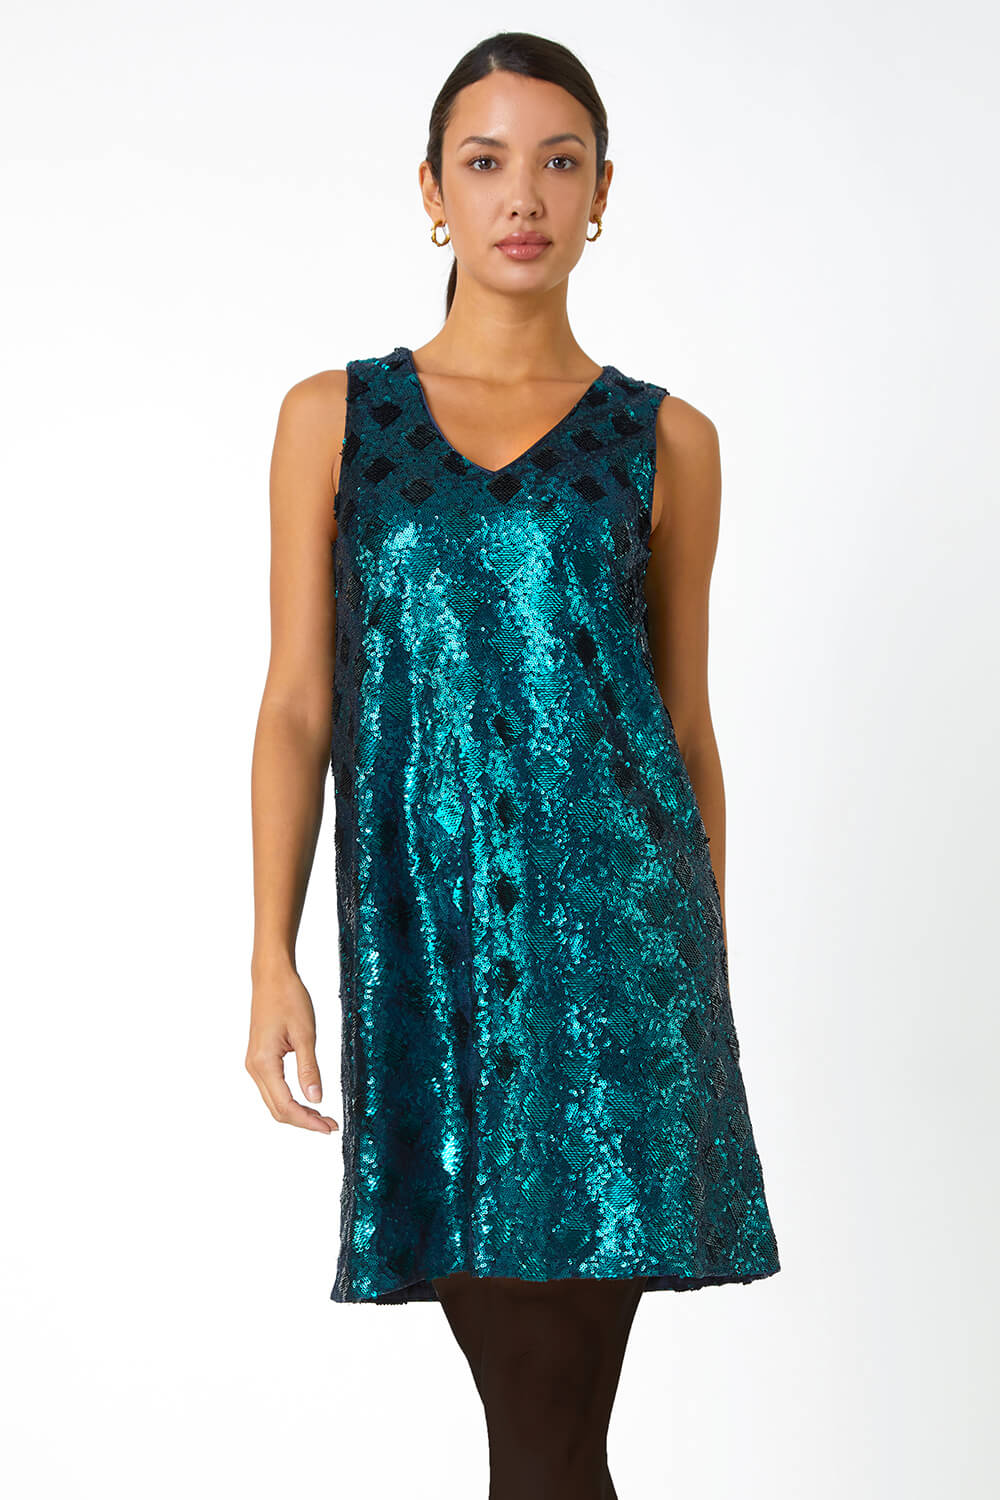 Emerald Sequin Diamond Print Swing Stretch Dress, Image 2 of 5